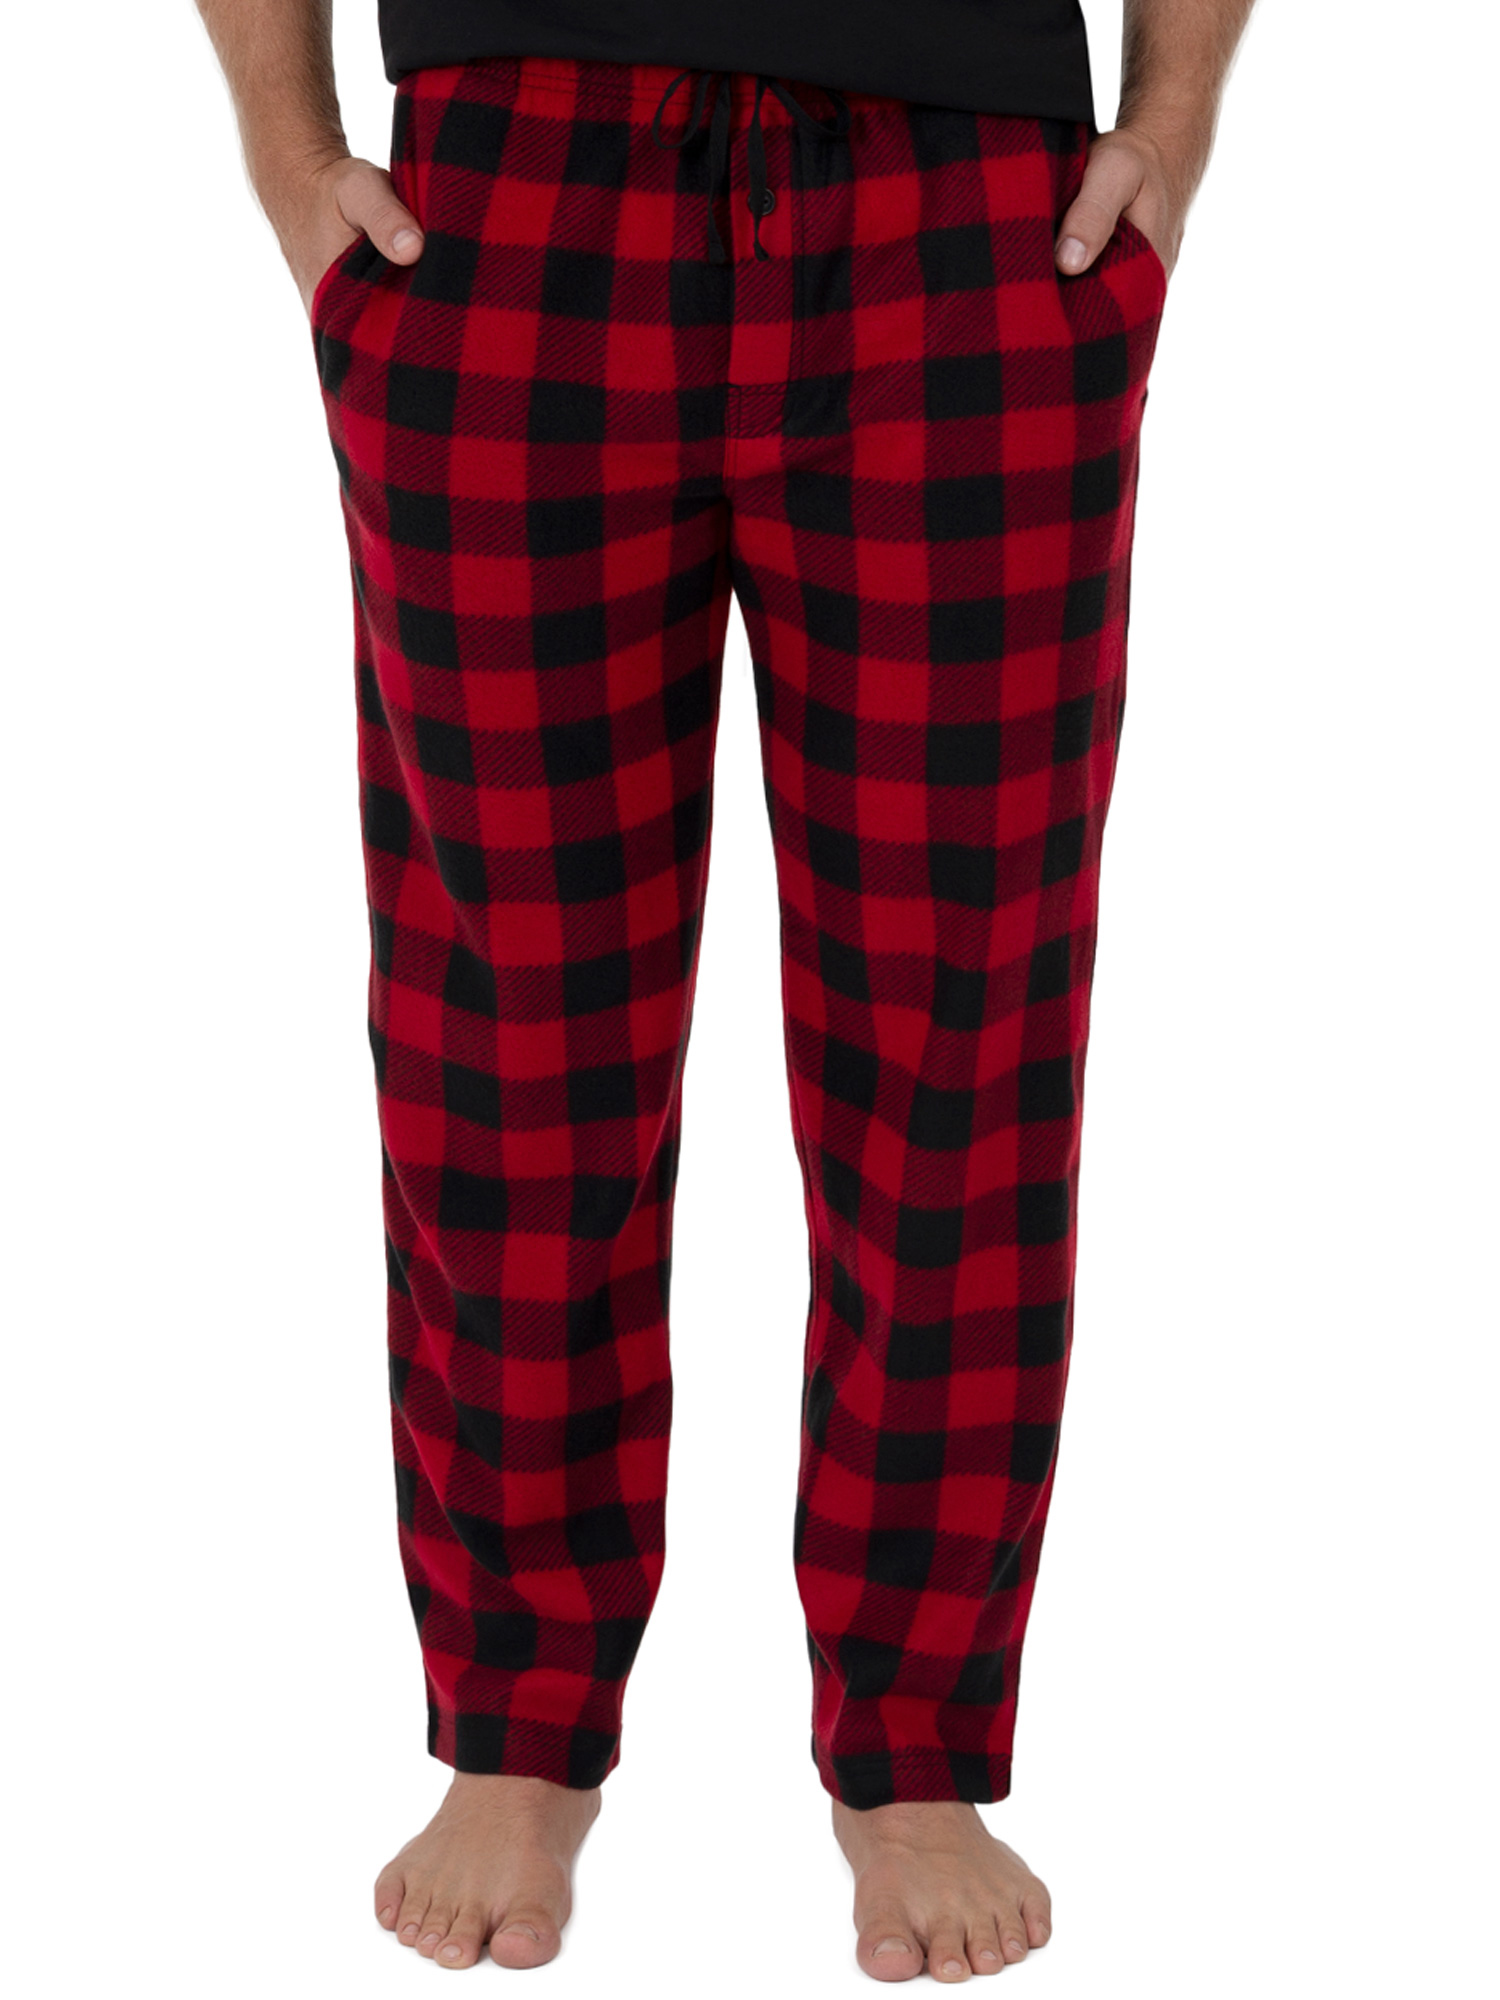 Fruit Of The Loom Men’s Short Sleeve Crewneck Top and Fleece Pajama Pants Set - image 4 of 5